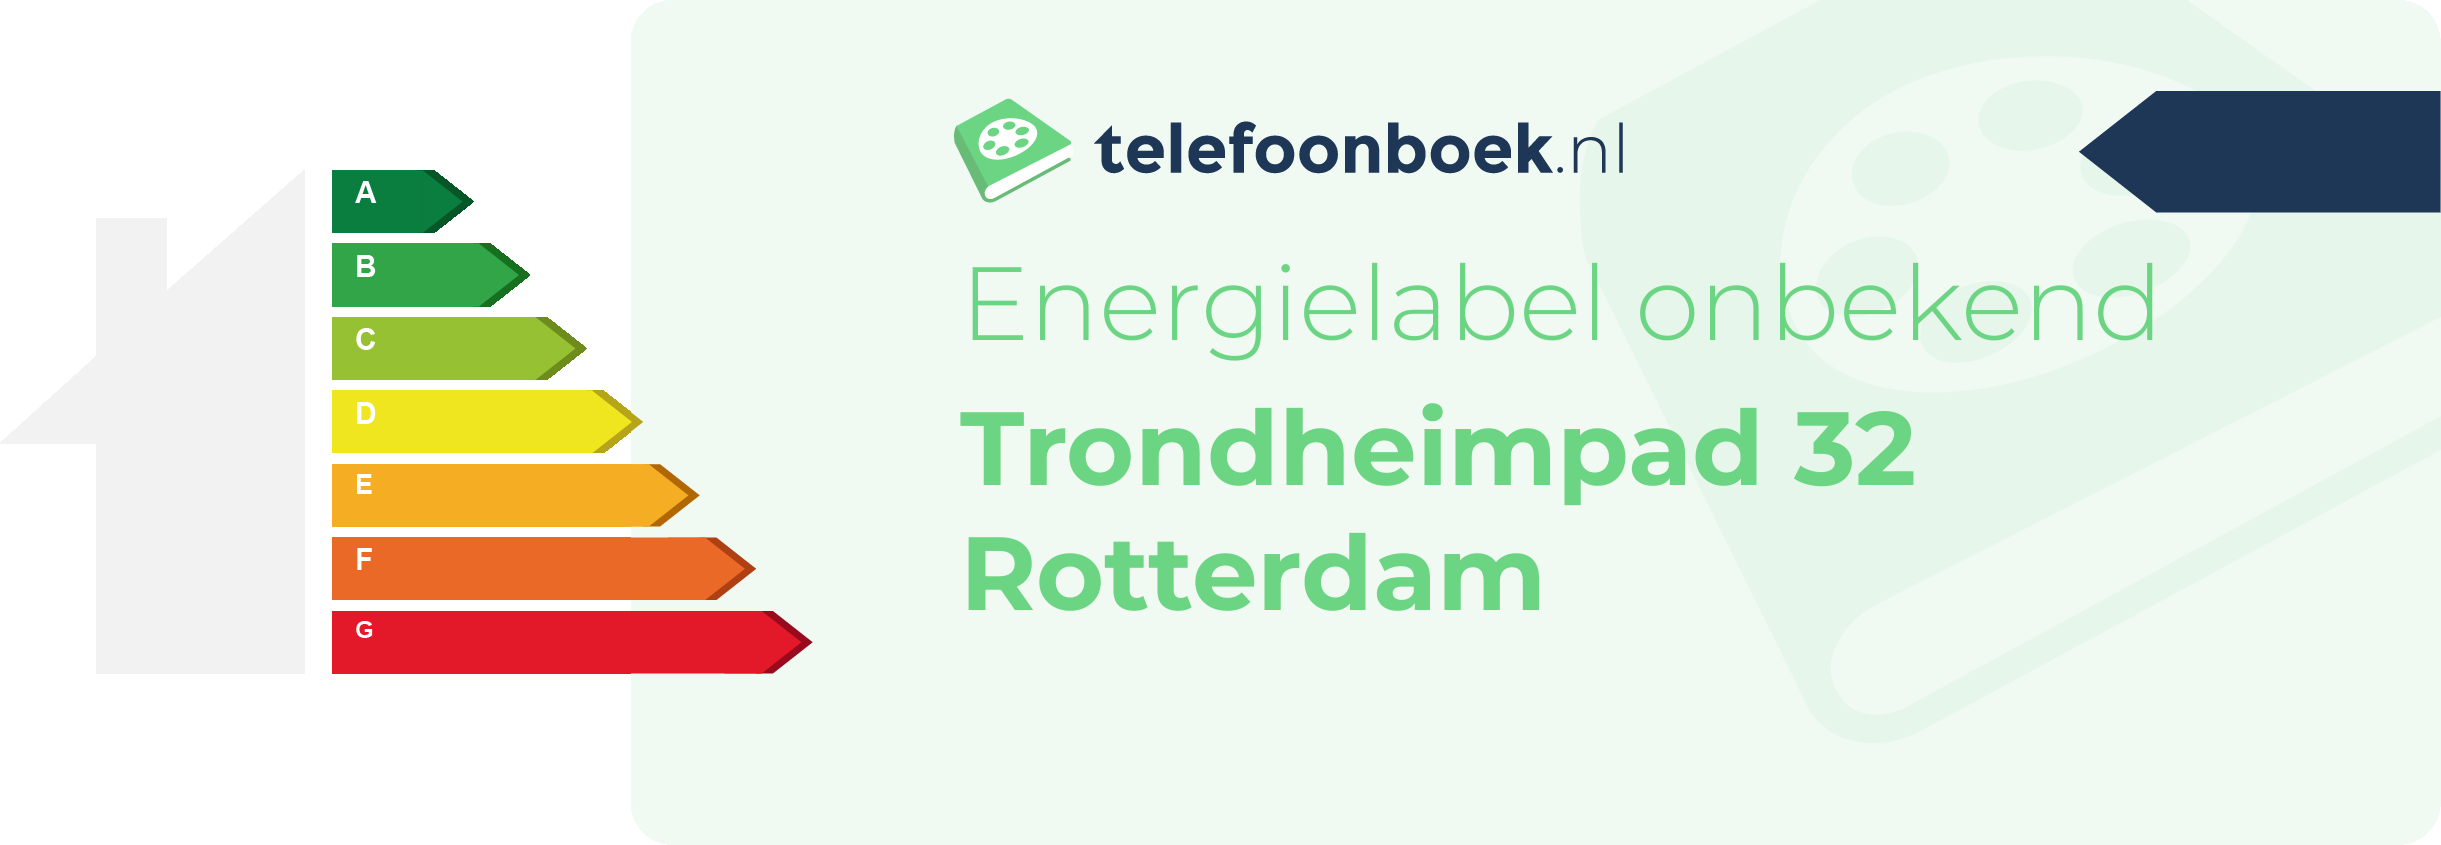 Energielabel Trondheimpad 32 Rotterdam